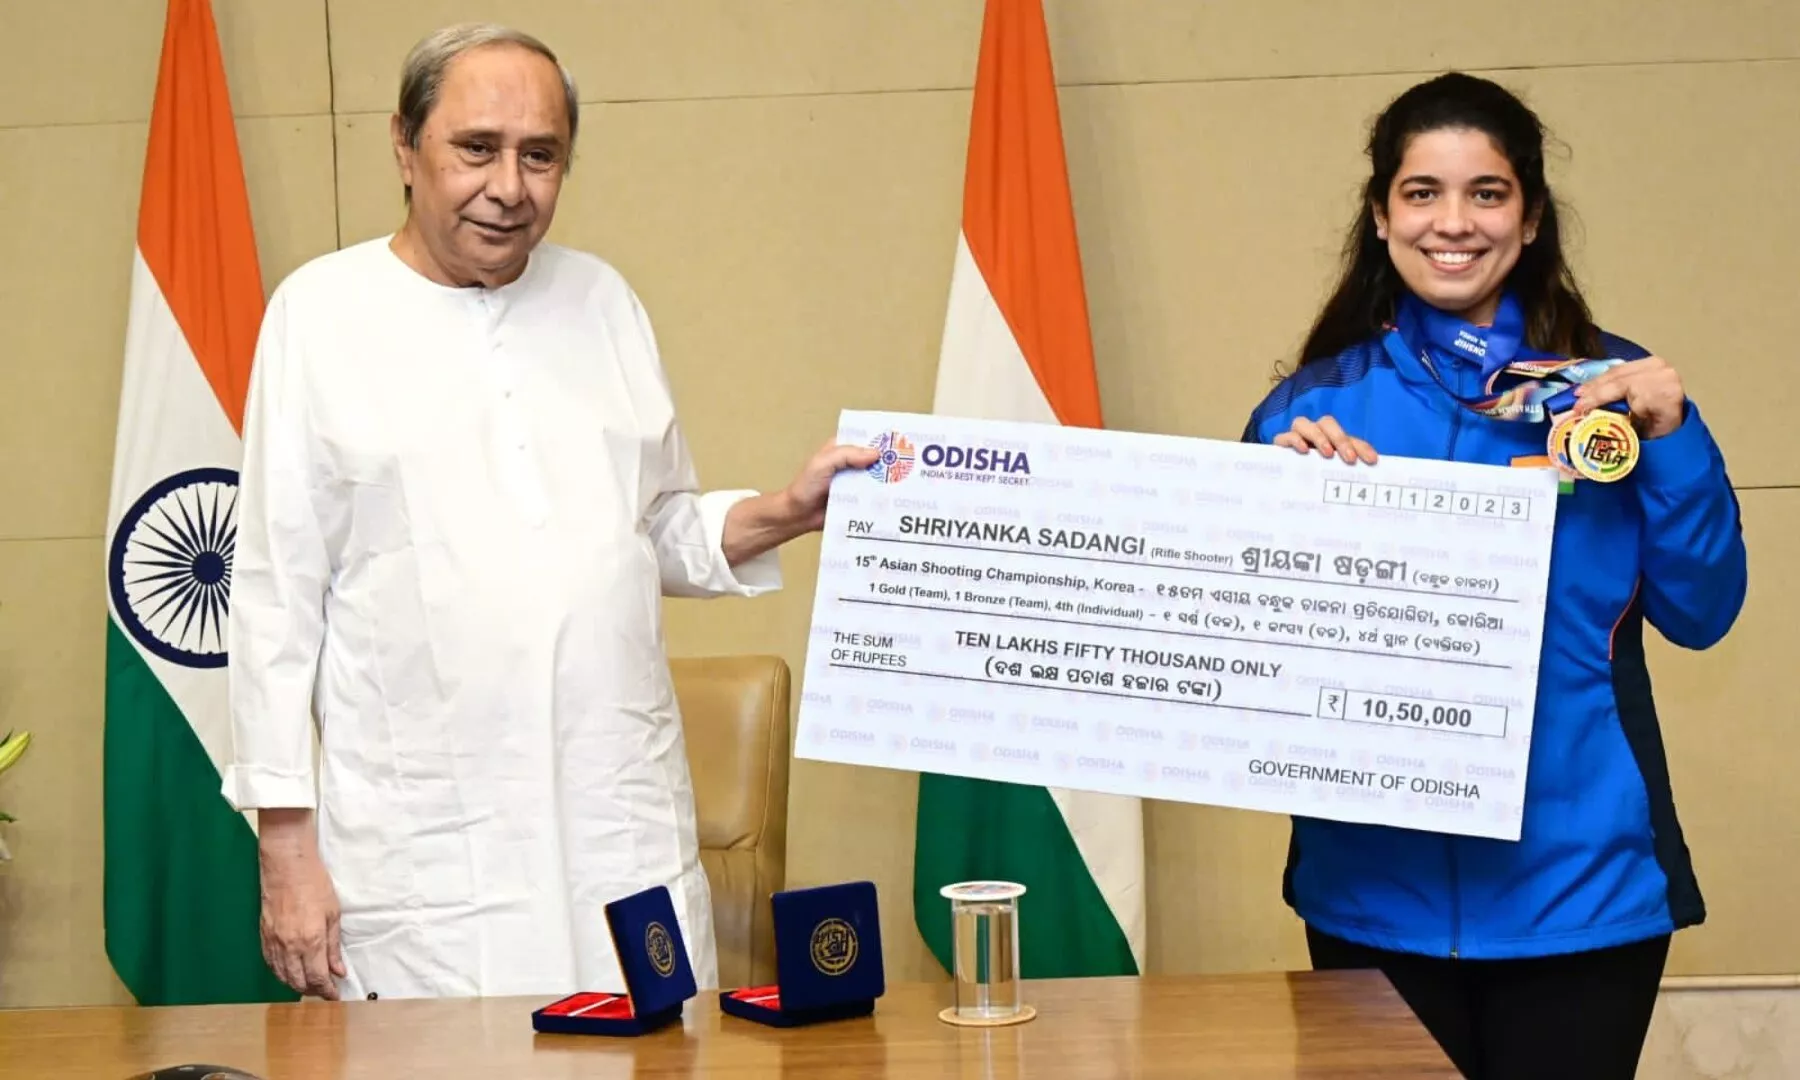 Odisha CM Naveen Patnaik felicitates Shriyanka Sadangi for her achievements at Asian Shooting Championship 2023